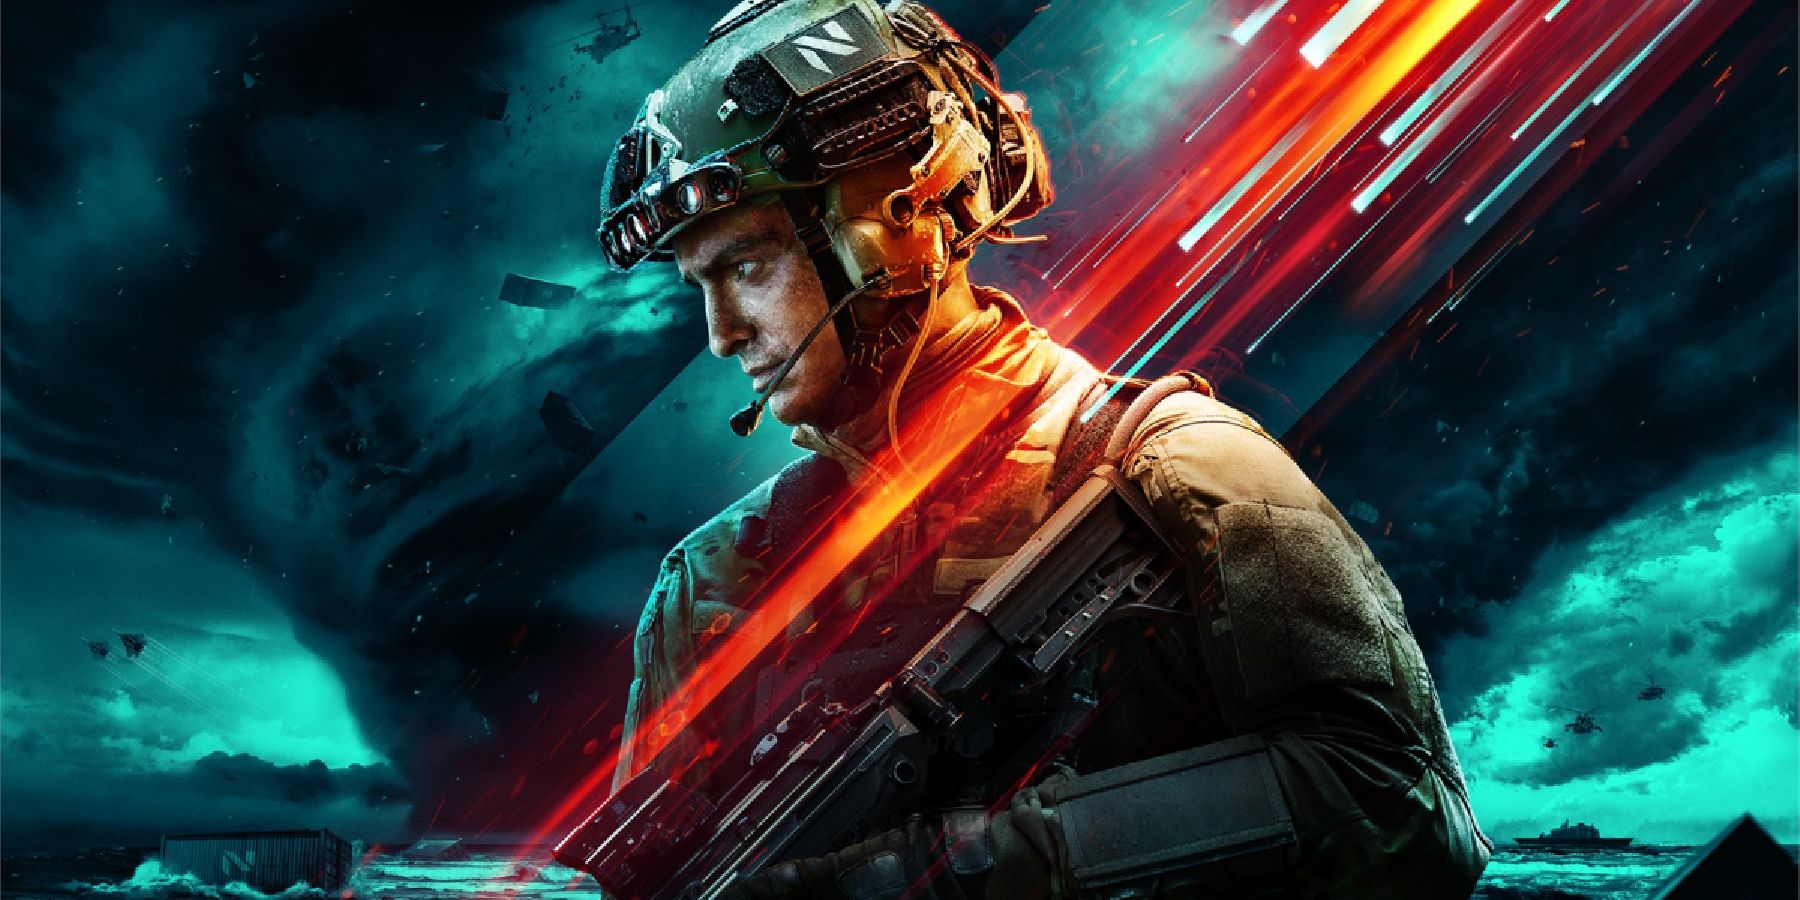 Battlefield 2042 – Season 6: Dark Creations Battle Pass – Electronic Arts